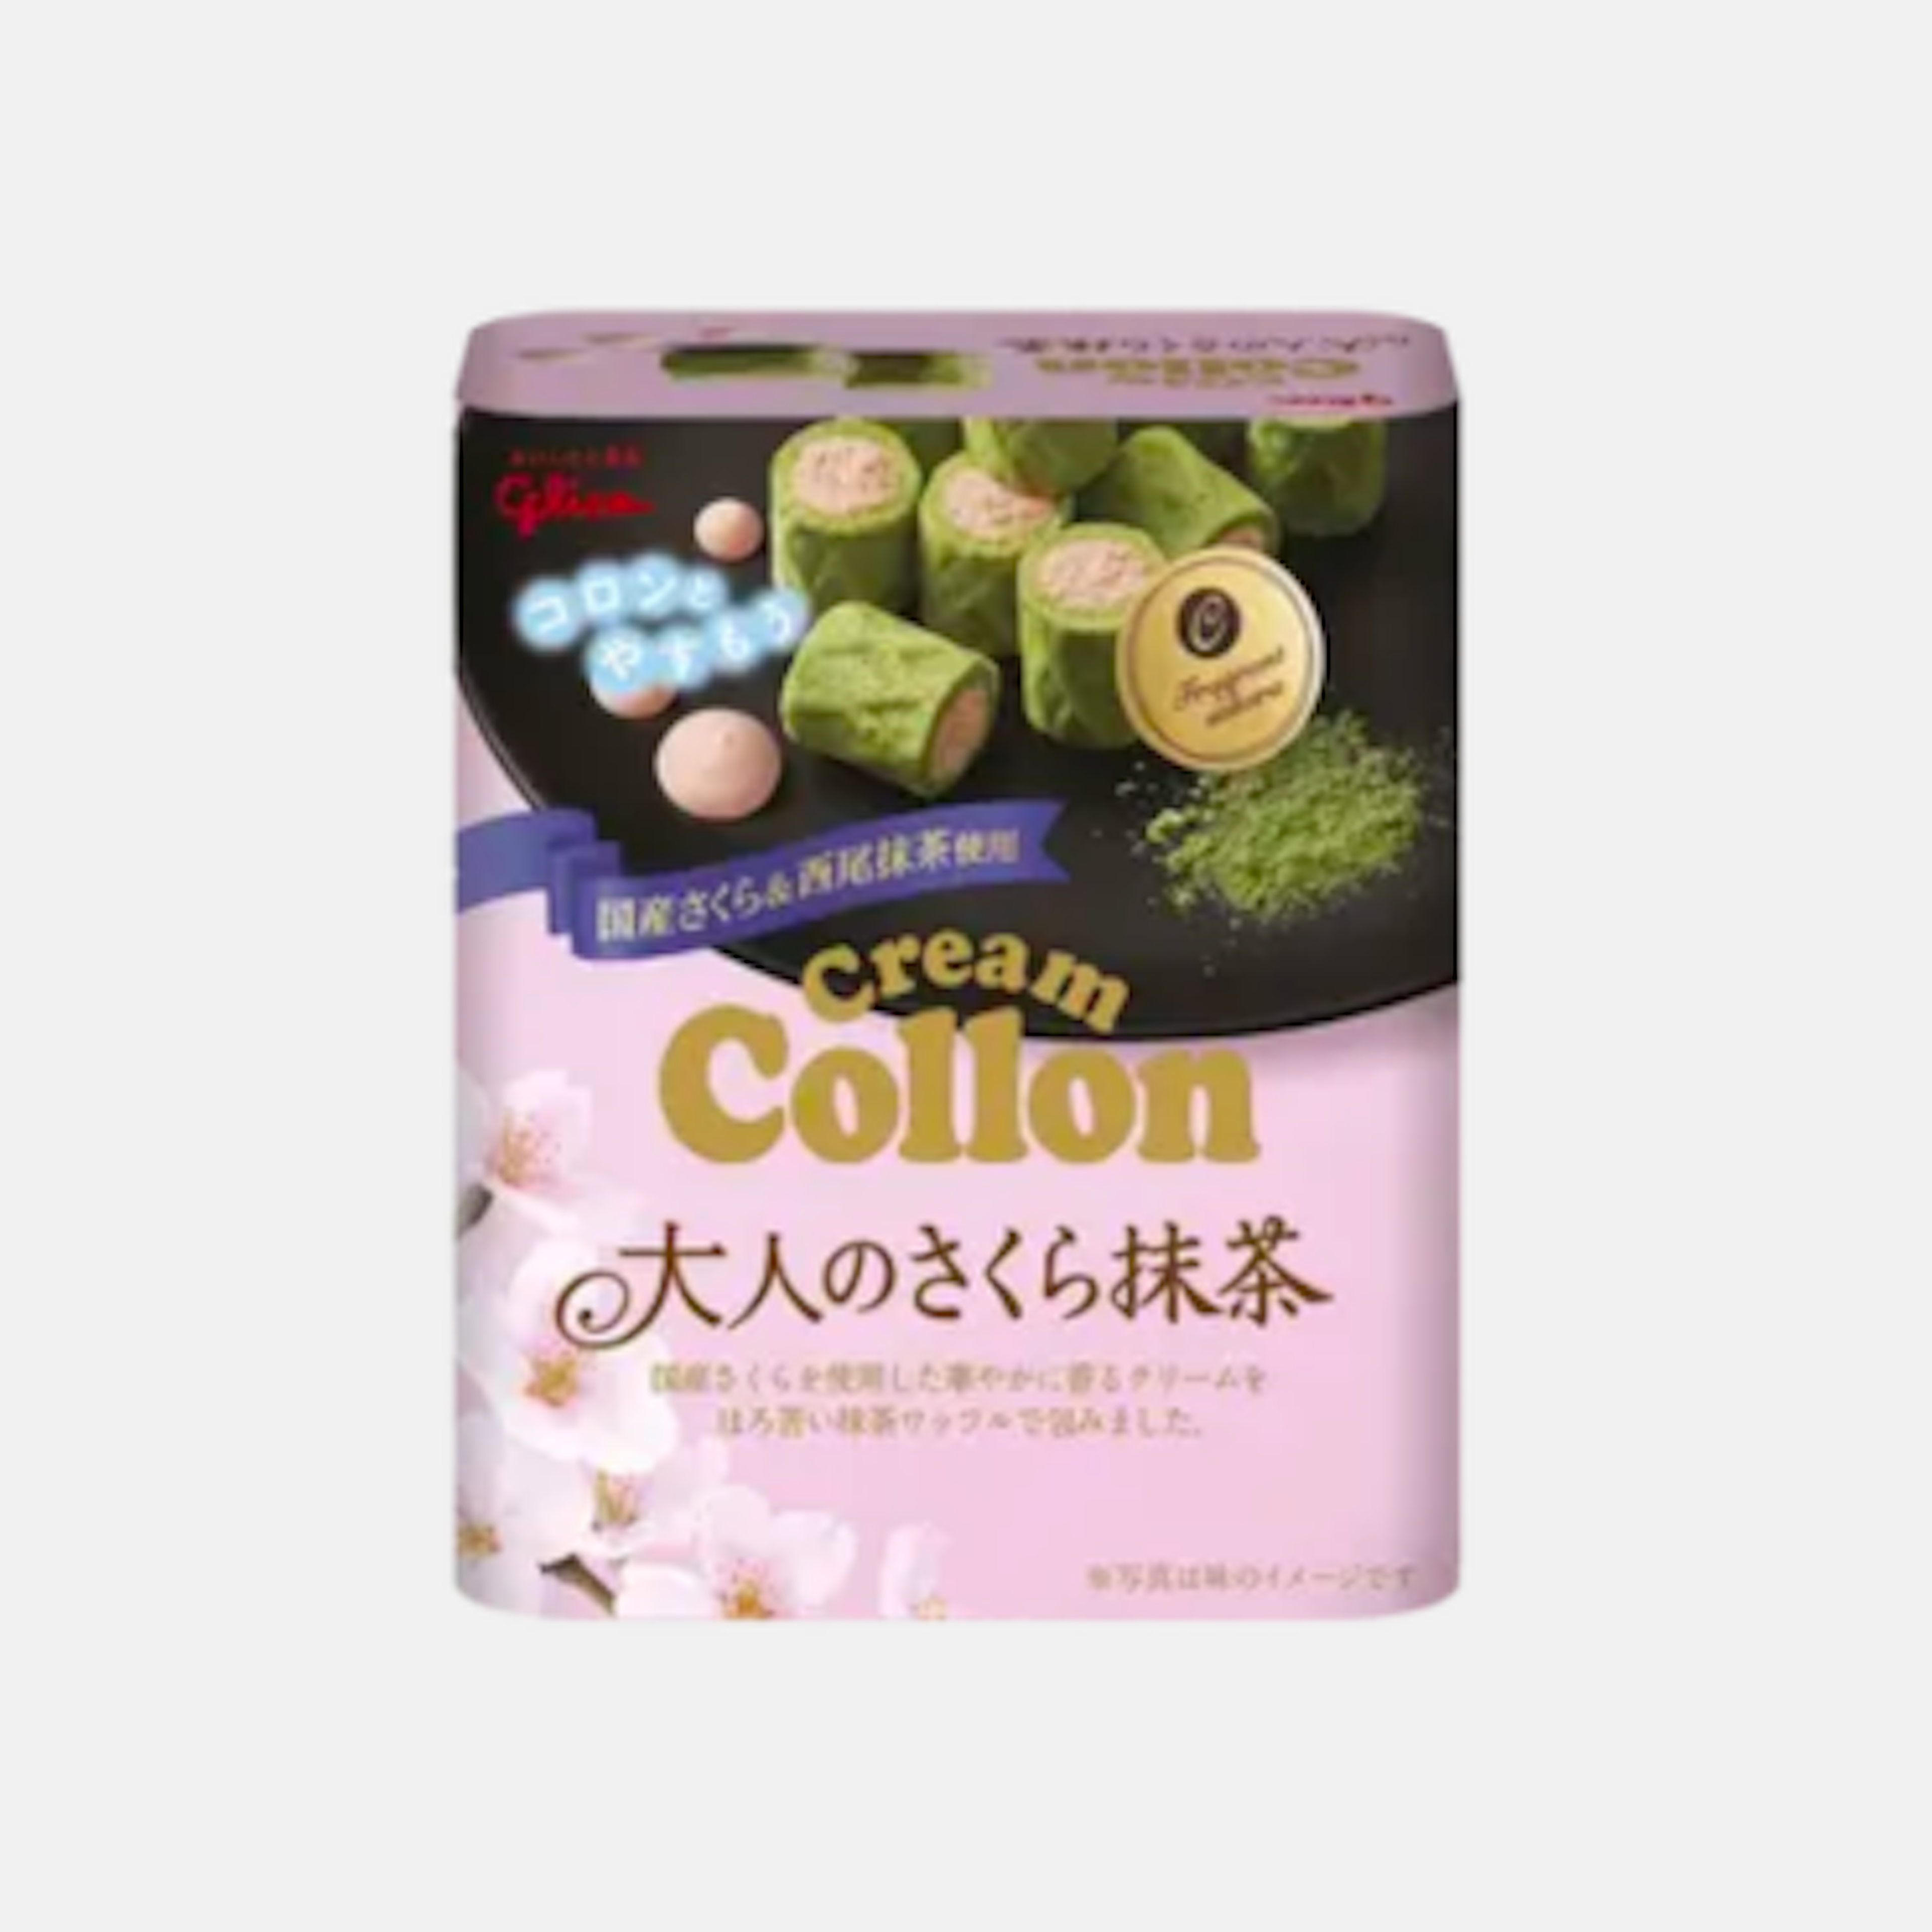 cream collon sakura matcha